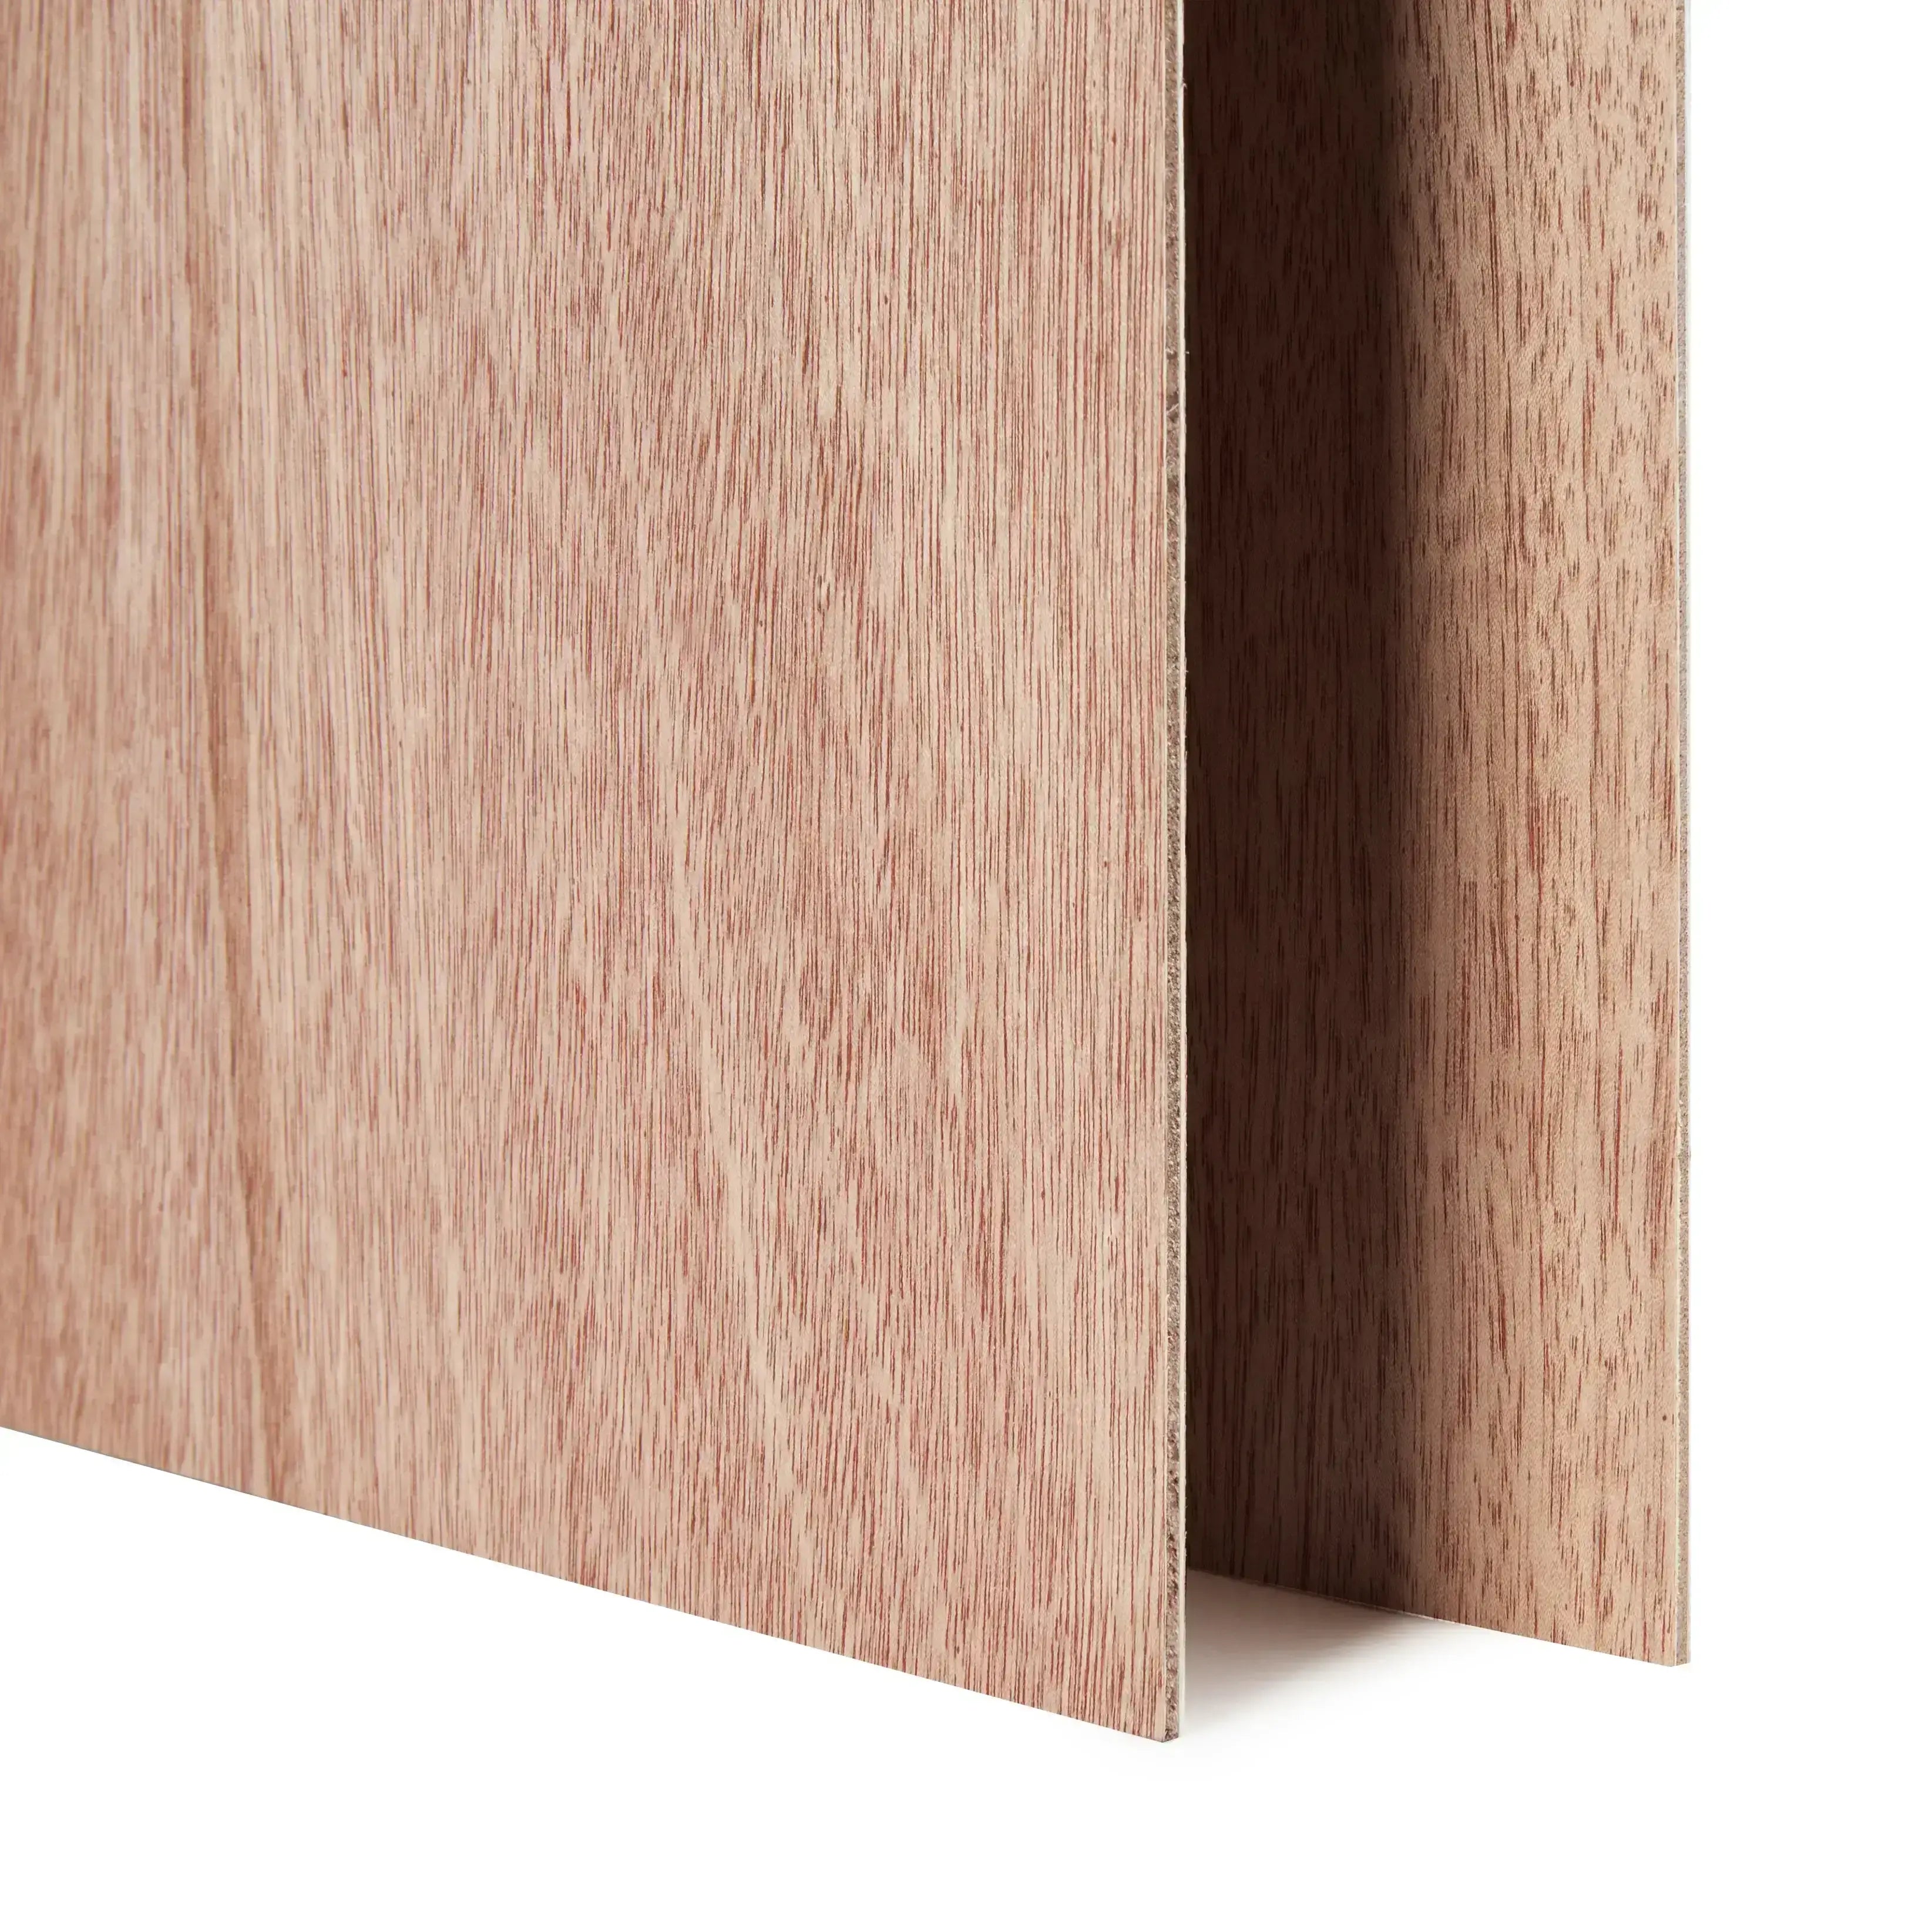 Mahogany, African Plywood Full Sheets 48x96 (4' x 8')